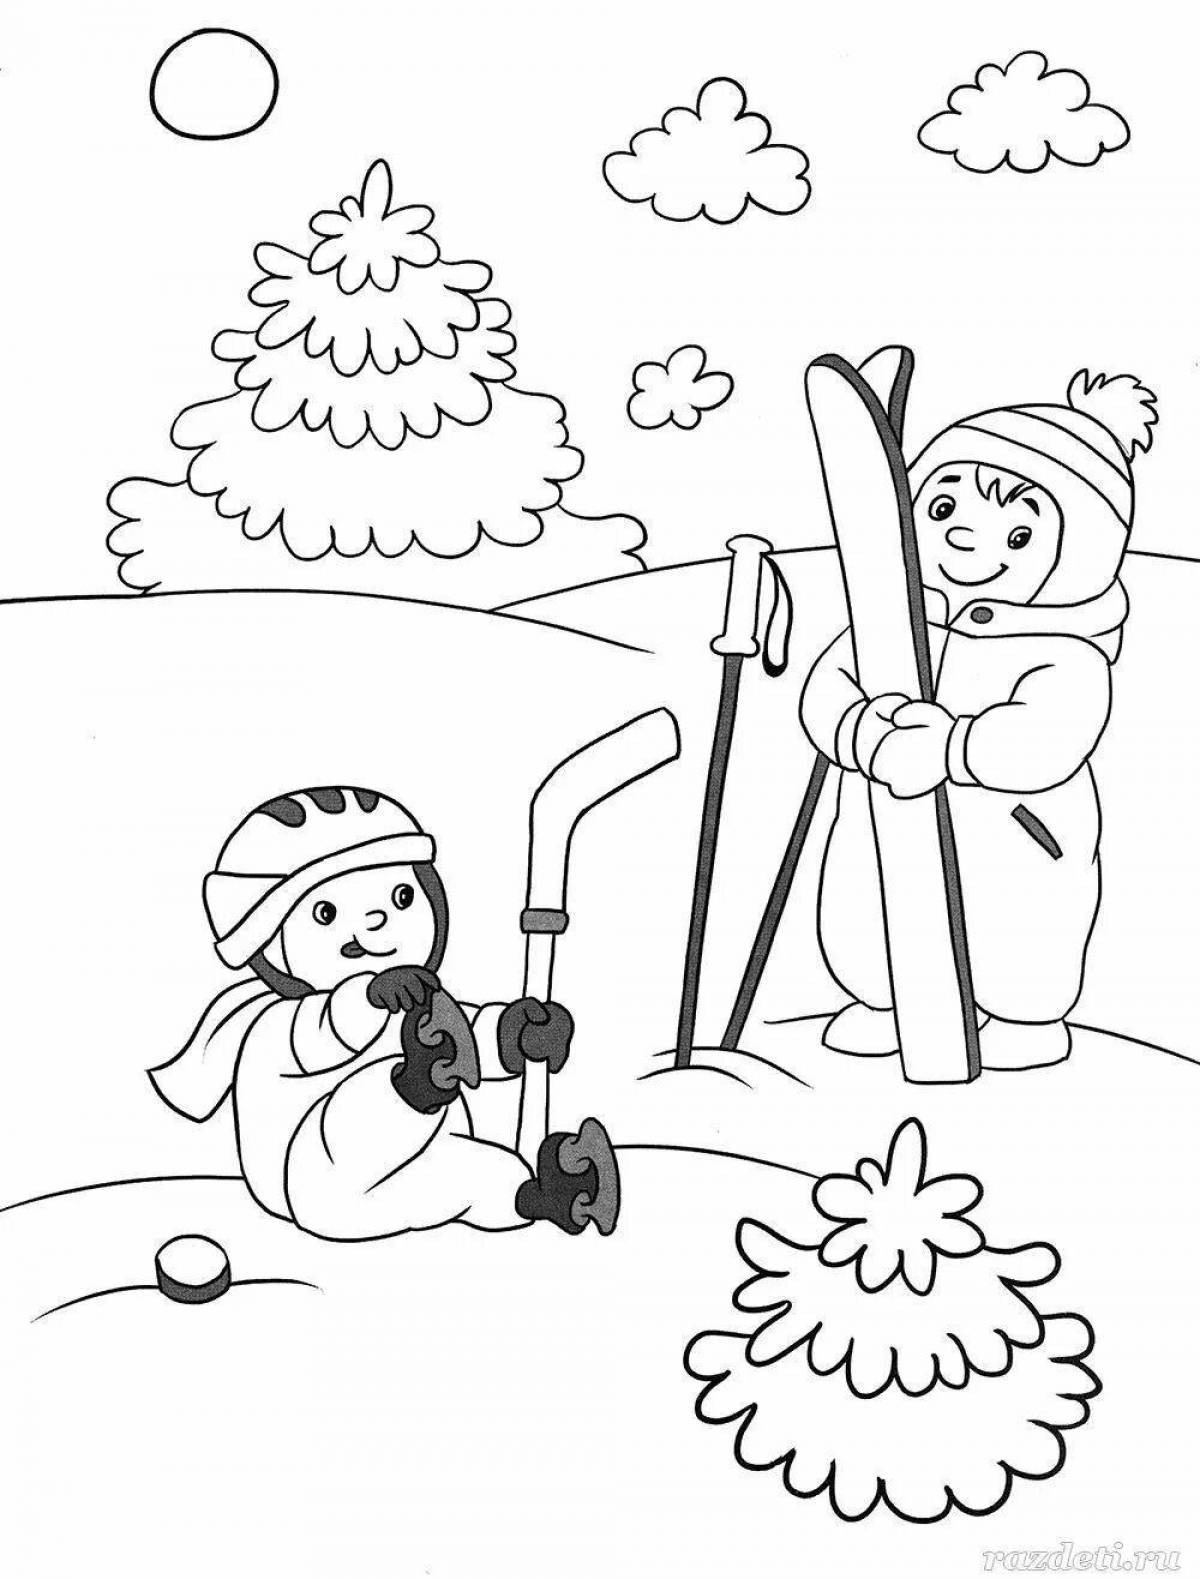 Skating winter coloring for schoolchildren